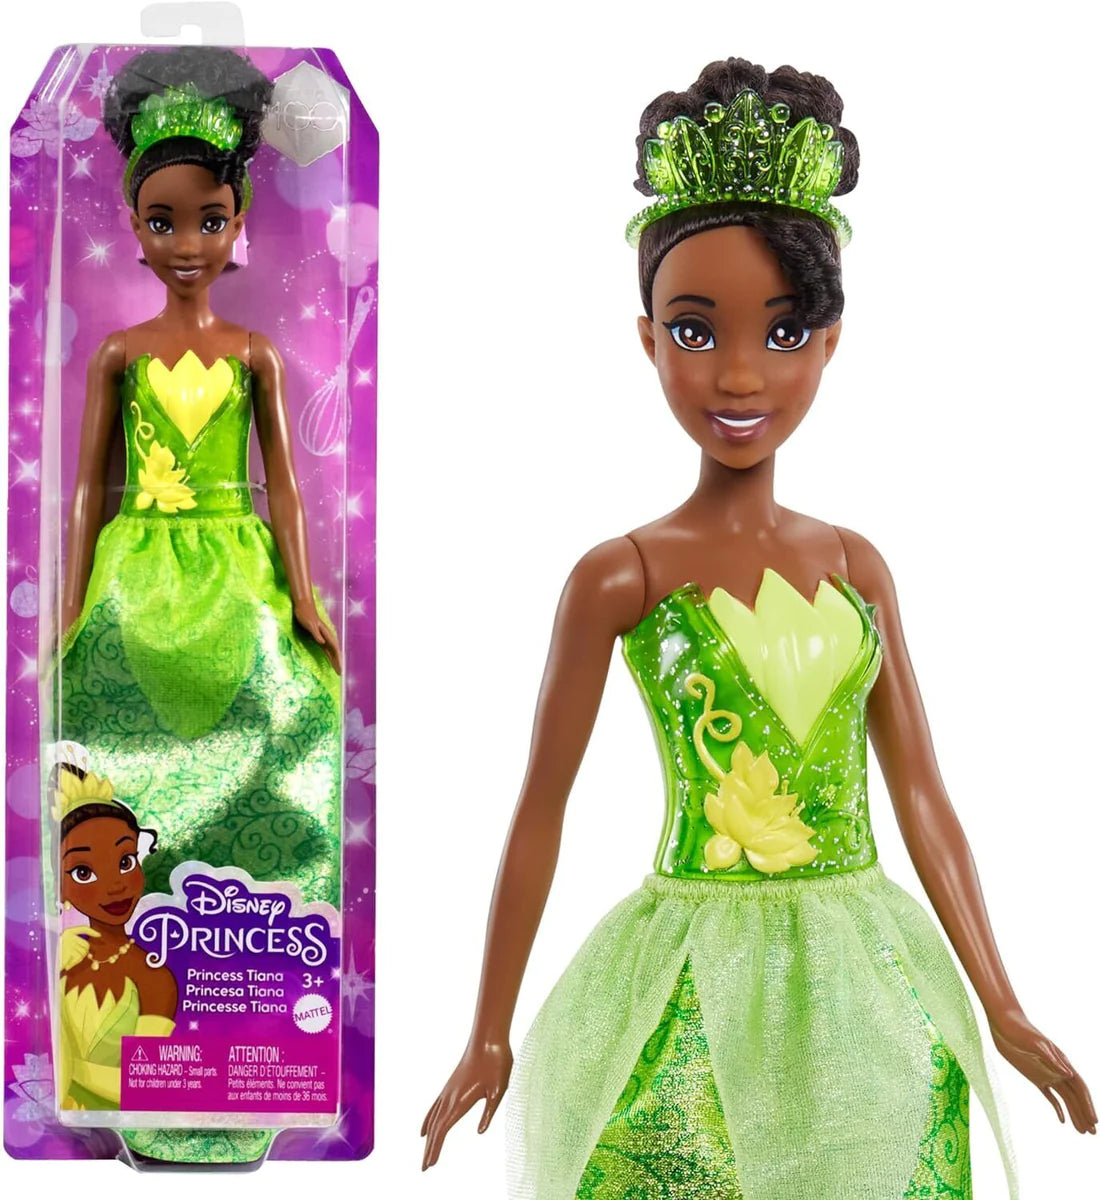 Disney Princess Toys Dolls Brand New Sleeping Beauty Snow White Shimmer Dolls - TIANA